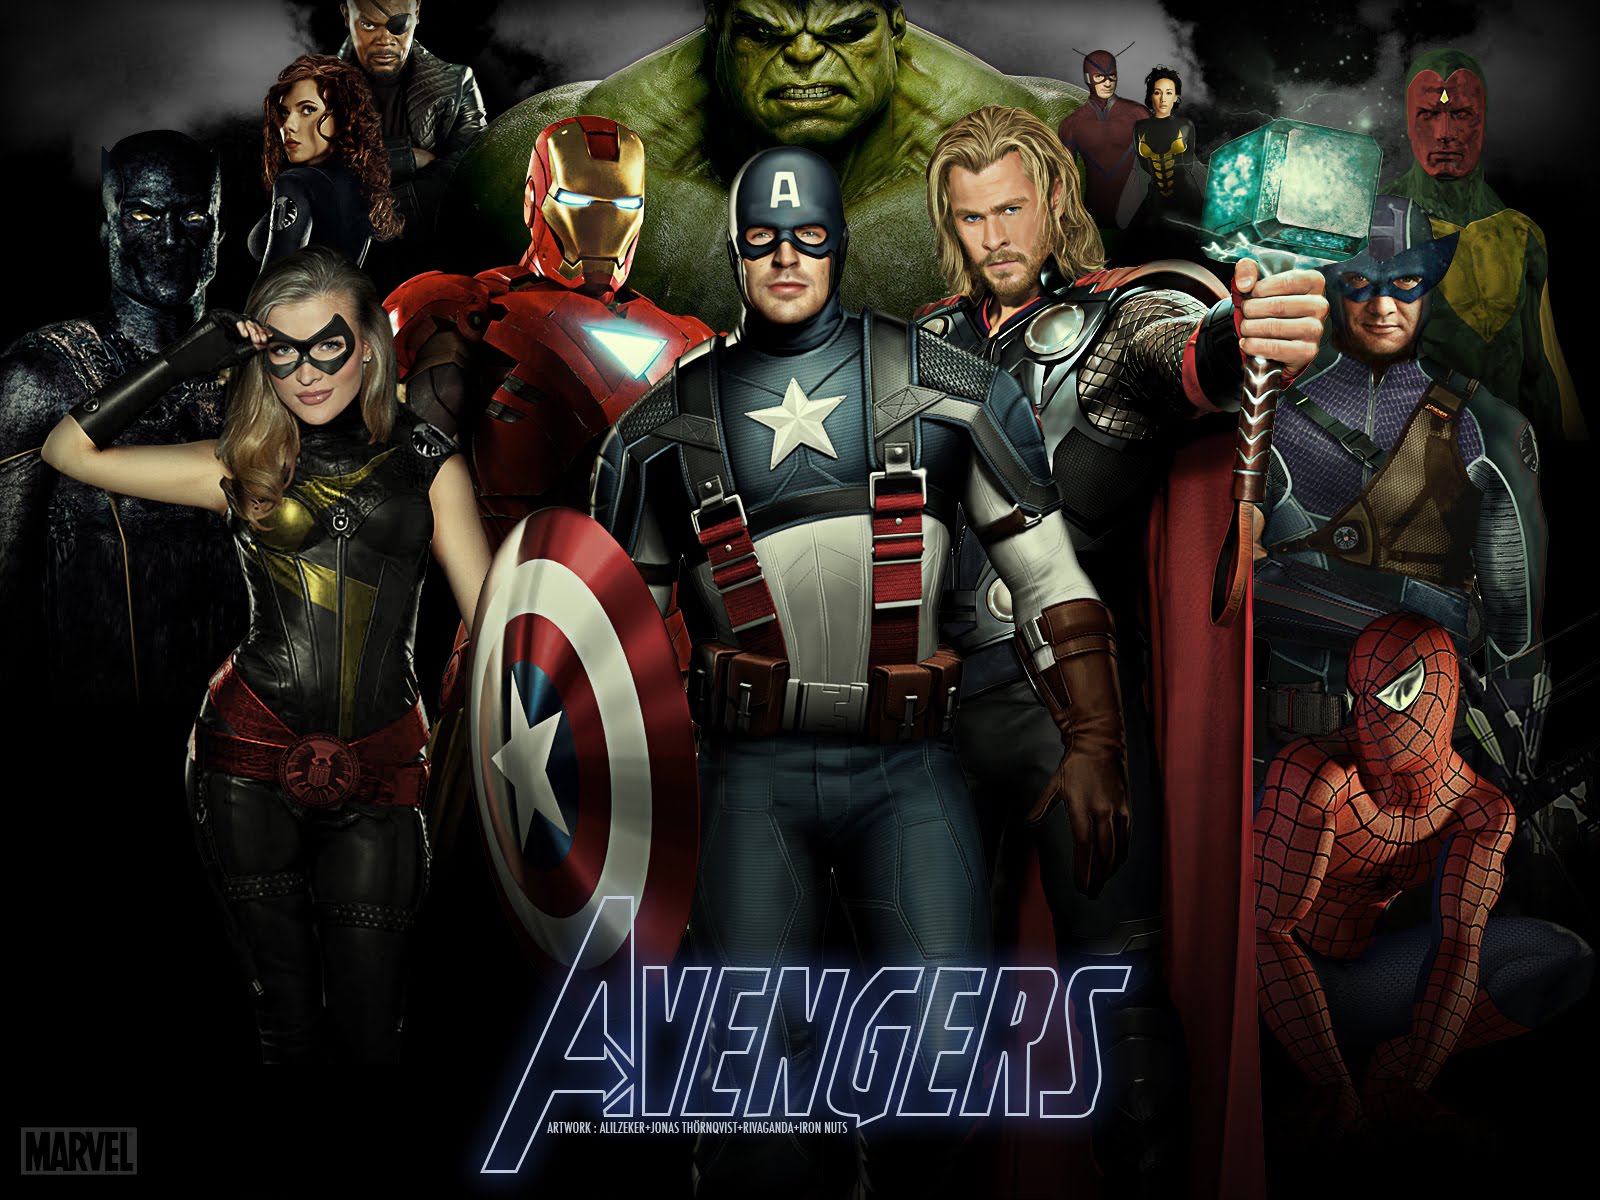 http://4.bp.blogspot.com/-xFC5DfM9d2g/TcXIkLCAWtI/AAAAAAAAAVo/bbOxAVwi2wA/s1600/1301228683-Avengers-Wallpaper-v2-by-ALilZeker-Featuring-Marvels-Captain-America-Thor-Iron-Man-Spider-Man-Black-Widow-Nick-Fury-More.jpg